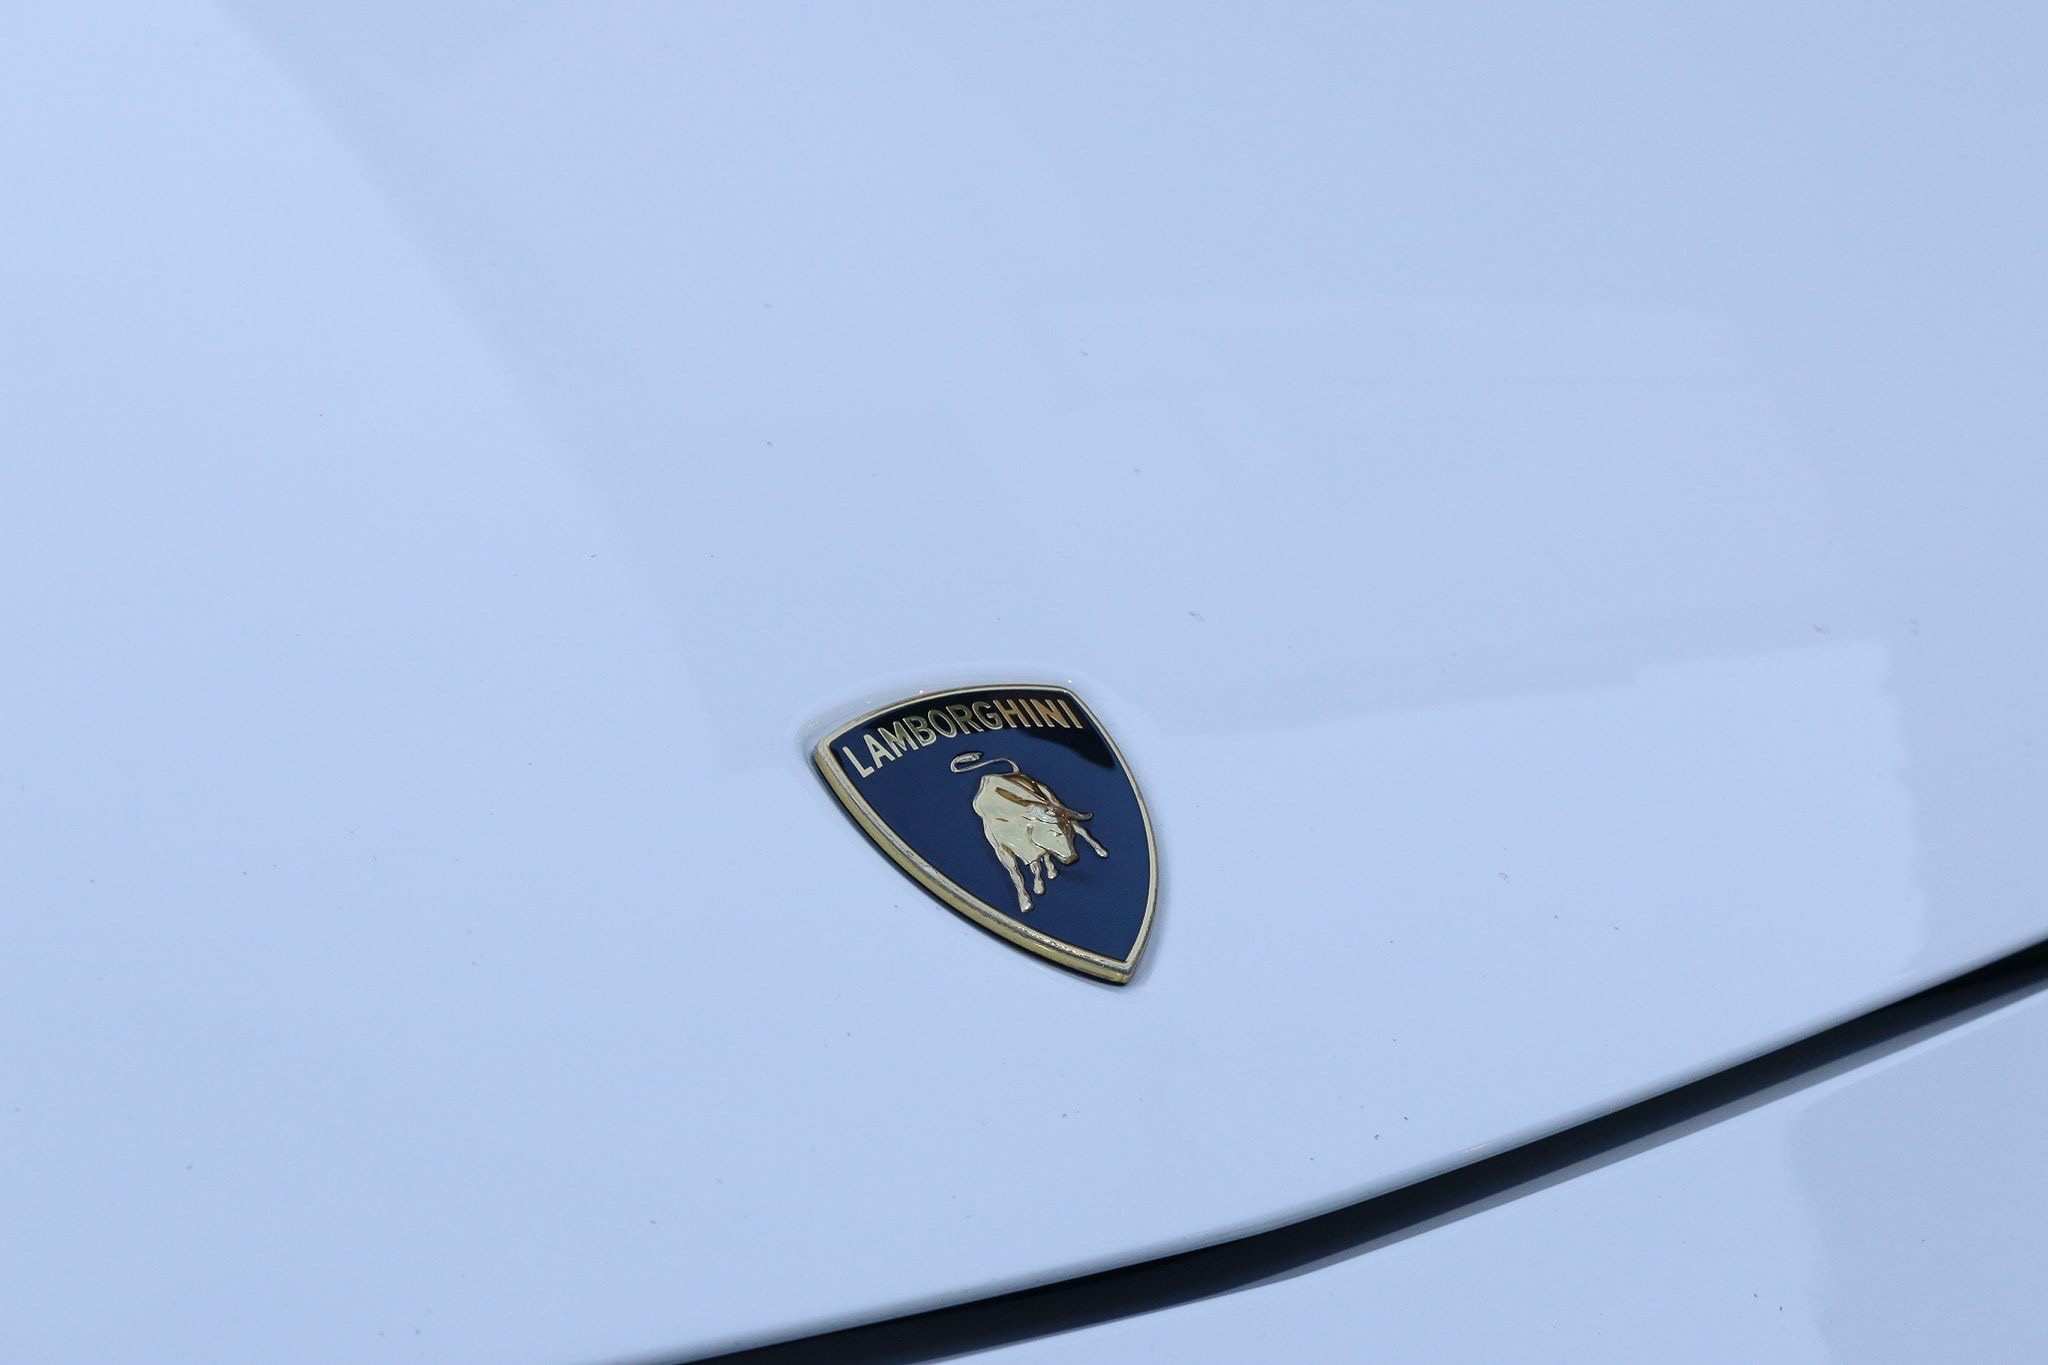 Lamborghini Gallardo ปี 2013 สีขาว